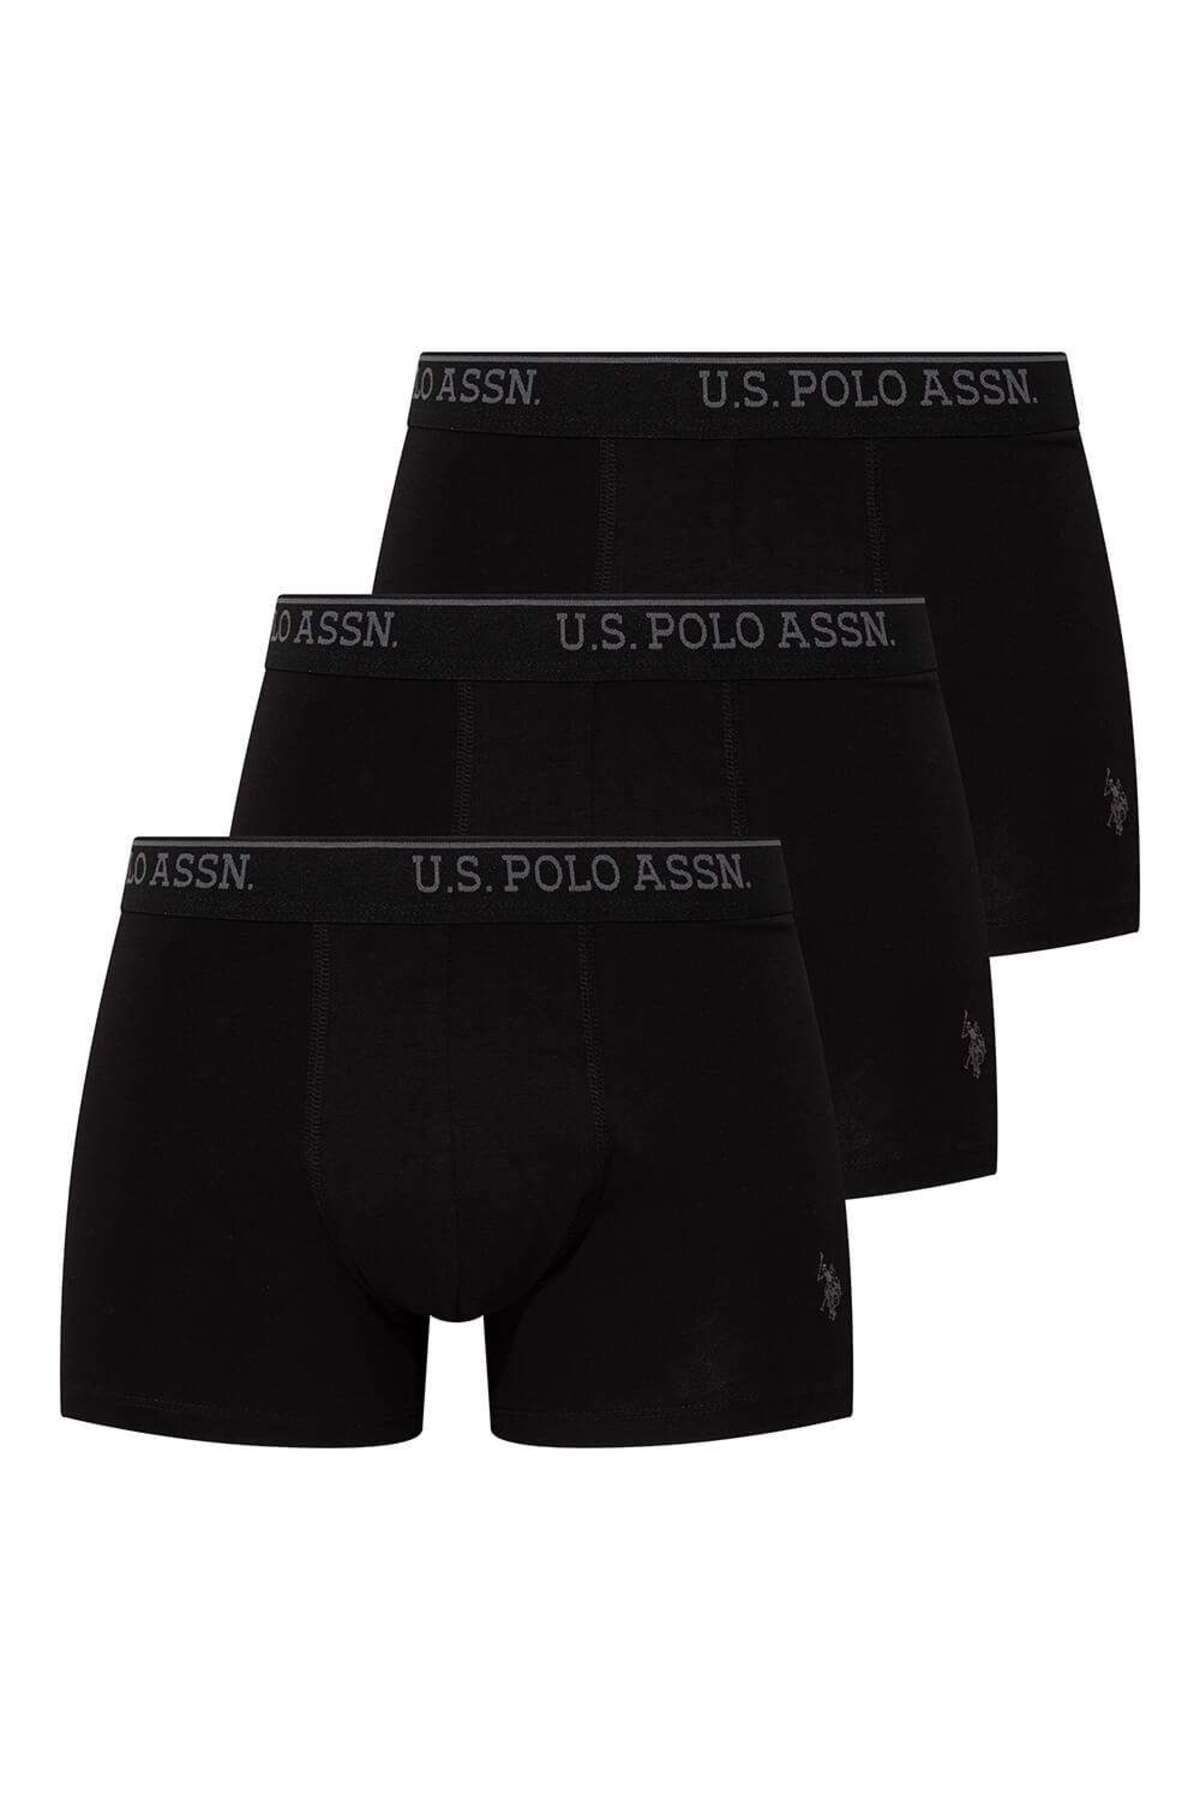 U.S. Polo Assn. Erkek Siyah 3 Lü Boxer 80097